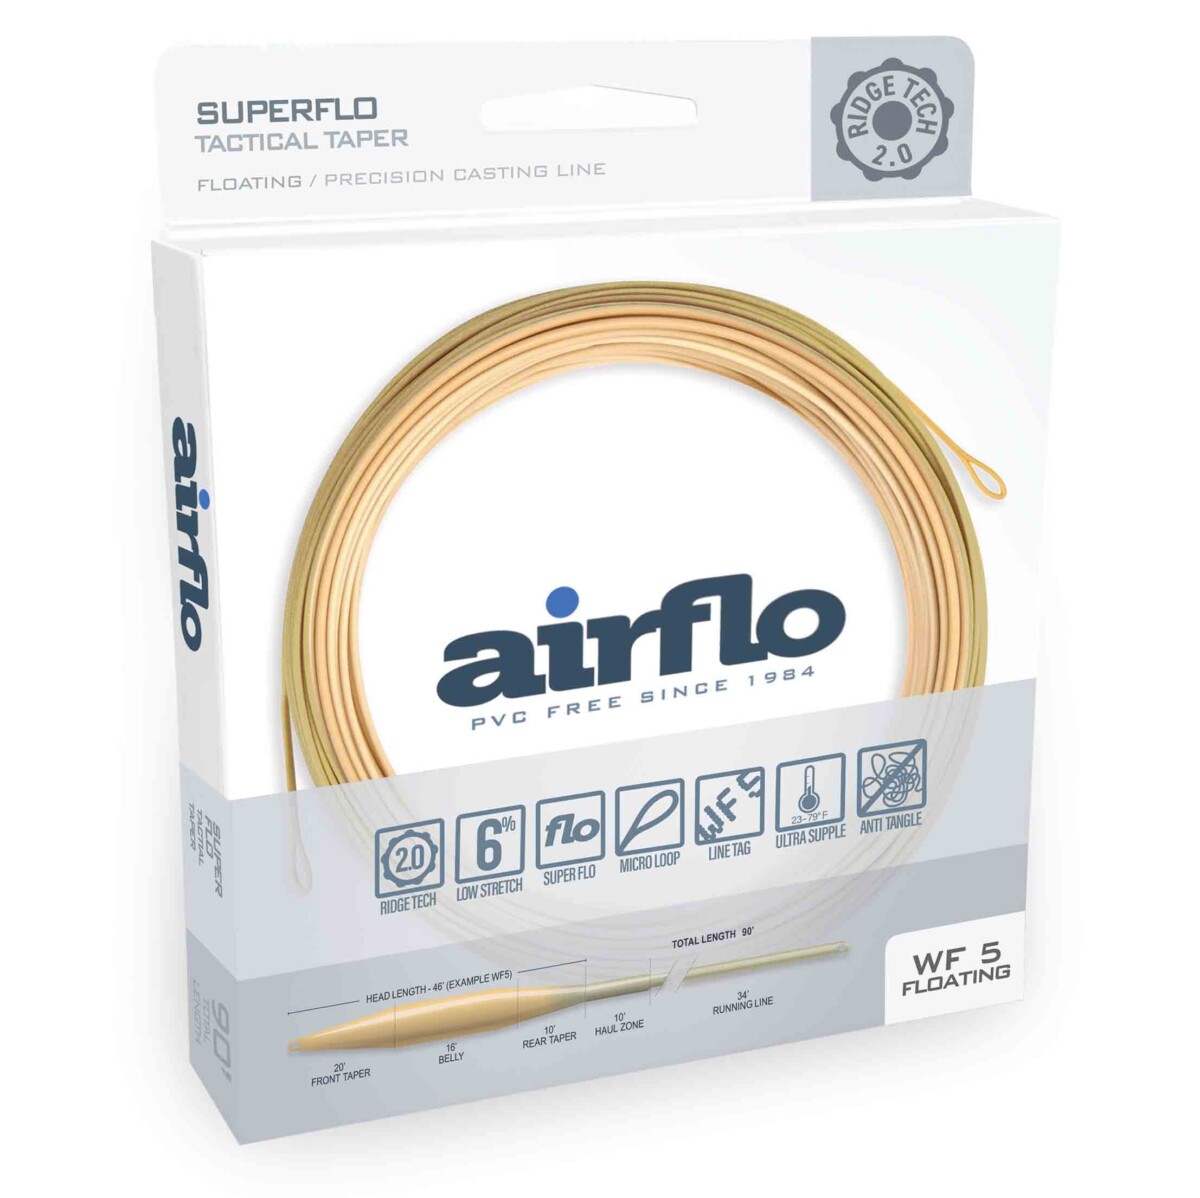 Linea AIRFLO RIDGE 2.0 SUPERFLO TACTICAL Fly Line